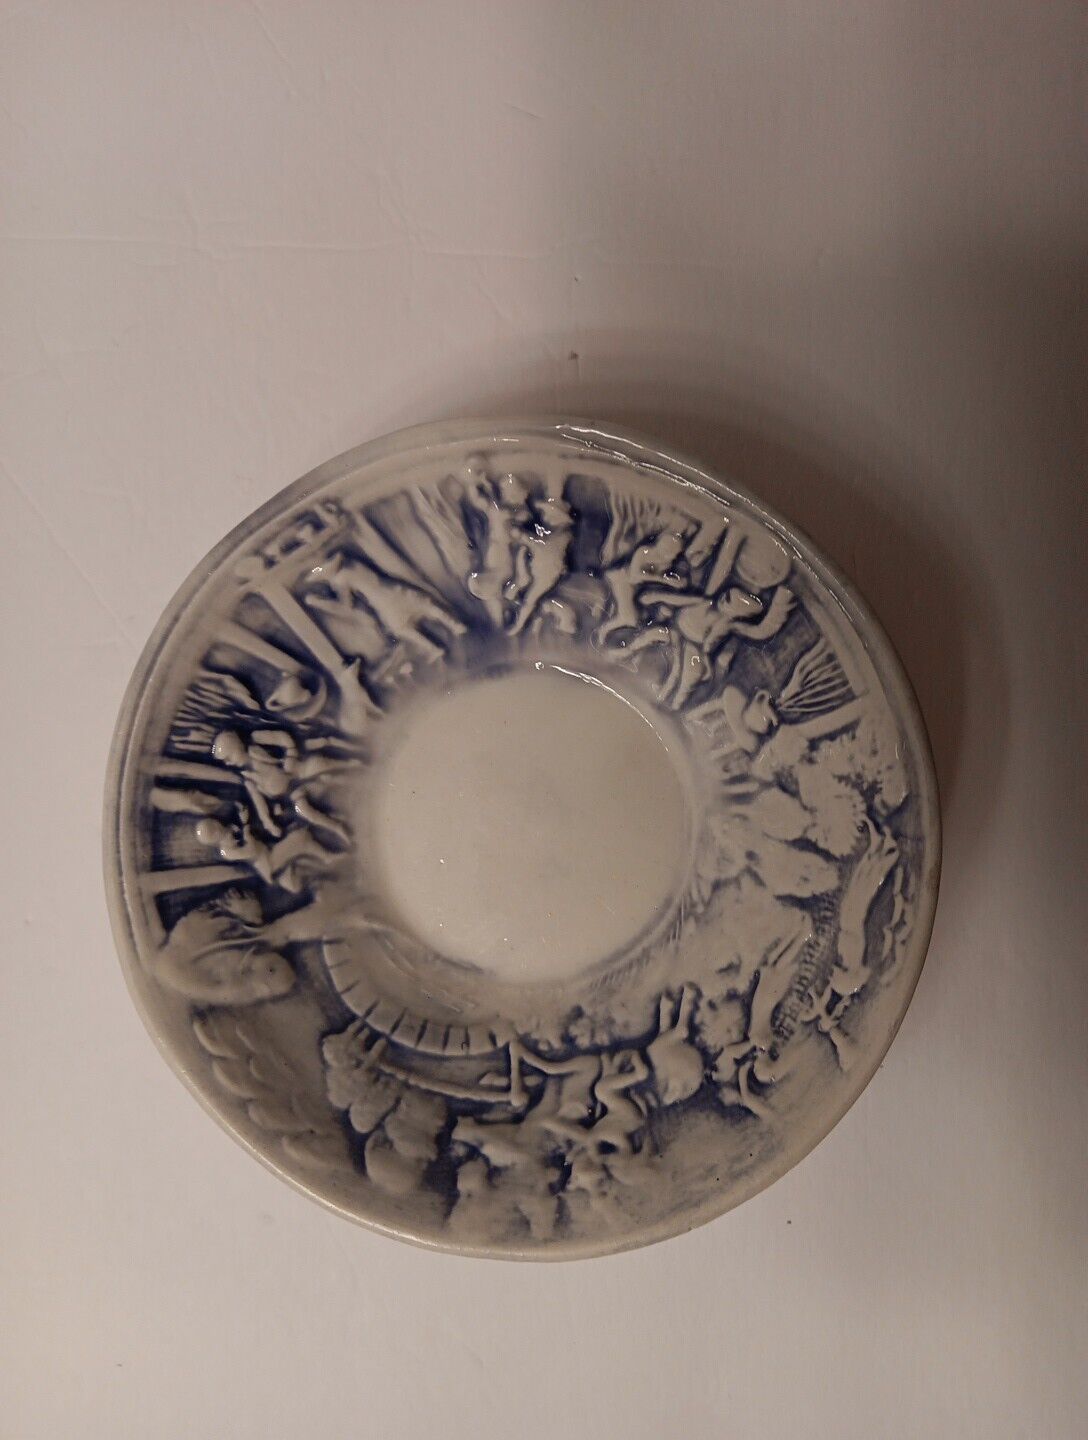 Vintage Pottery 18th Century Europa Ceramic Serving Bowl EUR 8.5” Across 3” Deep